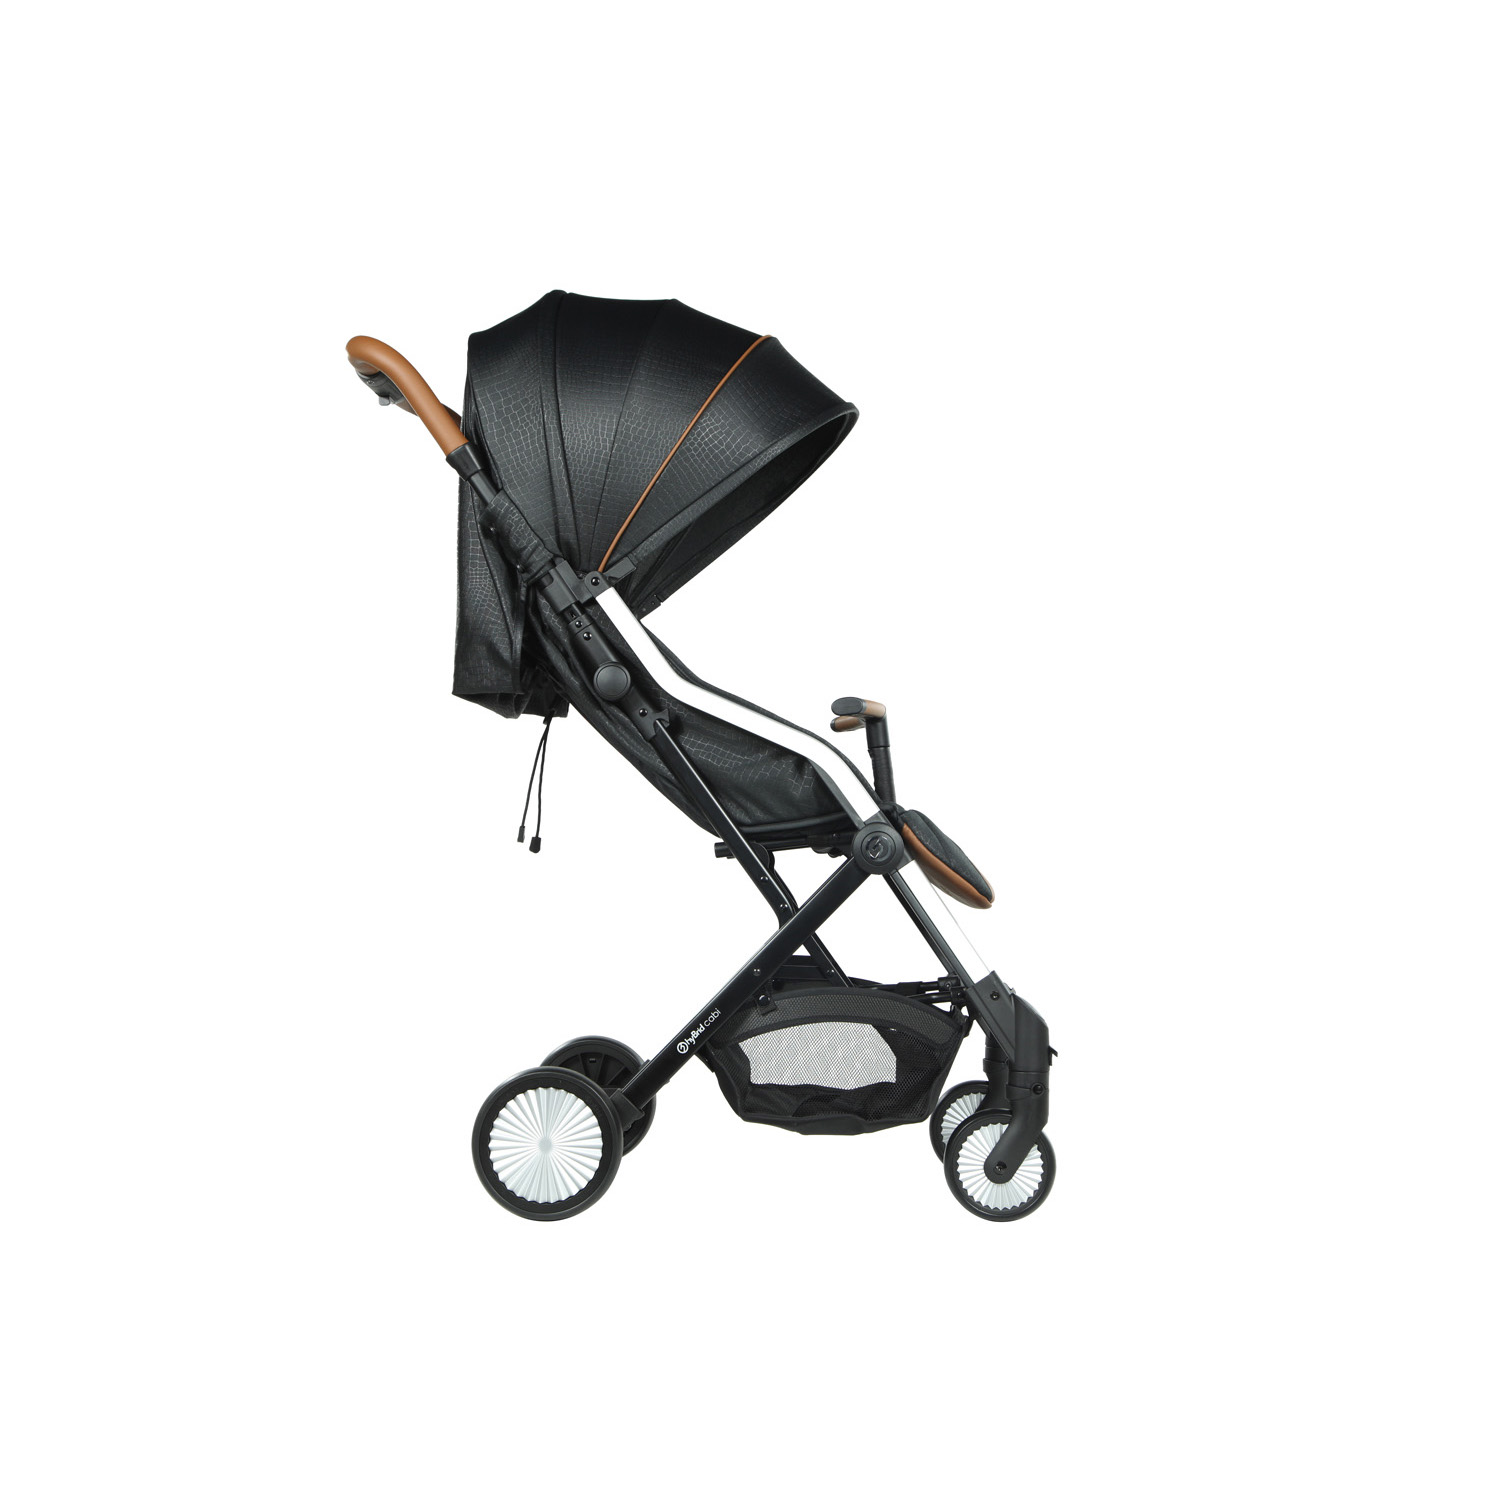 babystyle hybrid swivel stroller